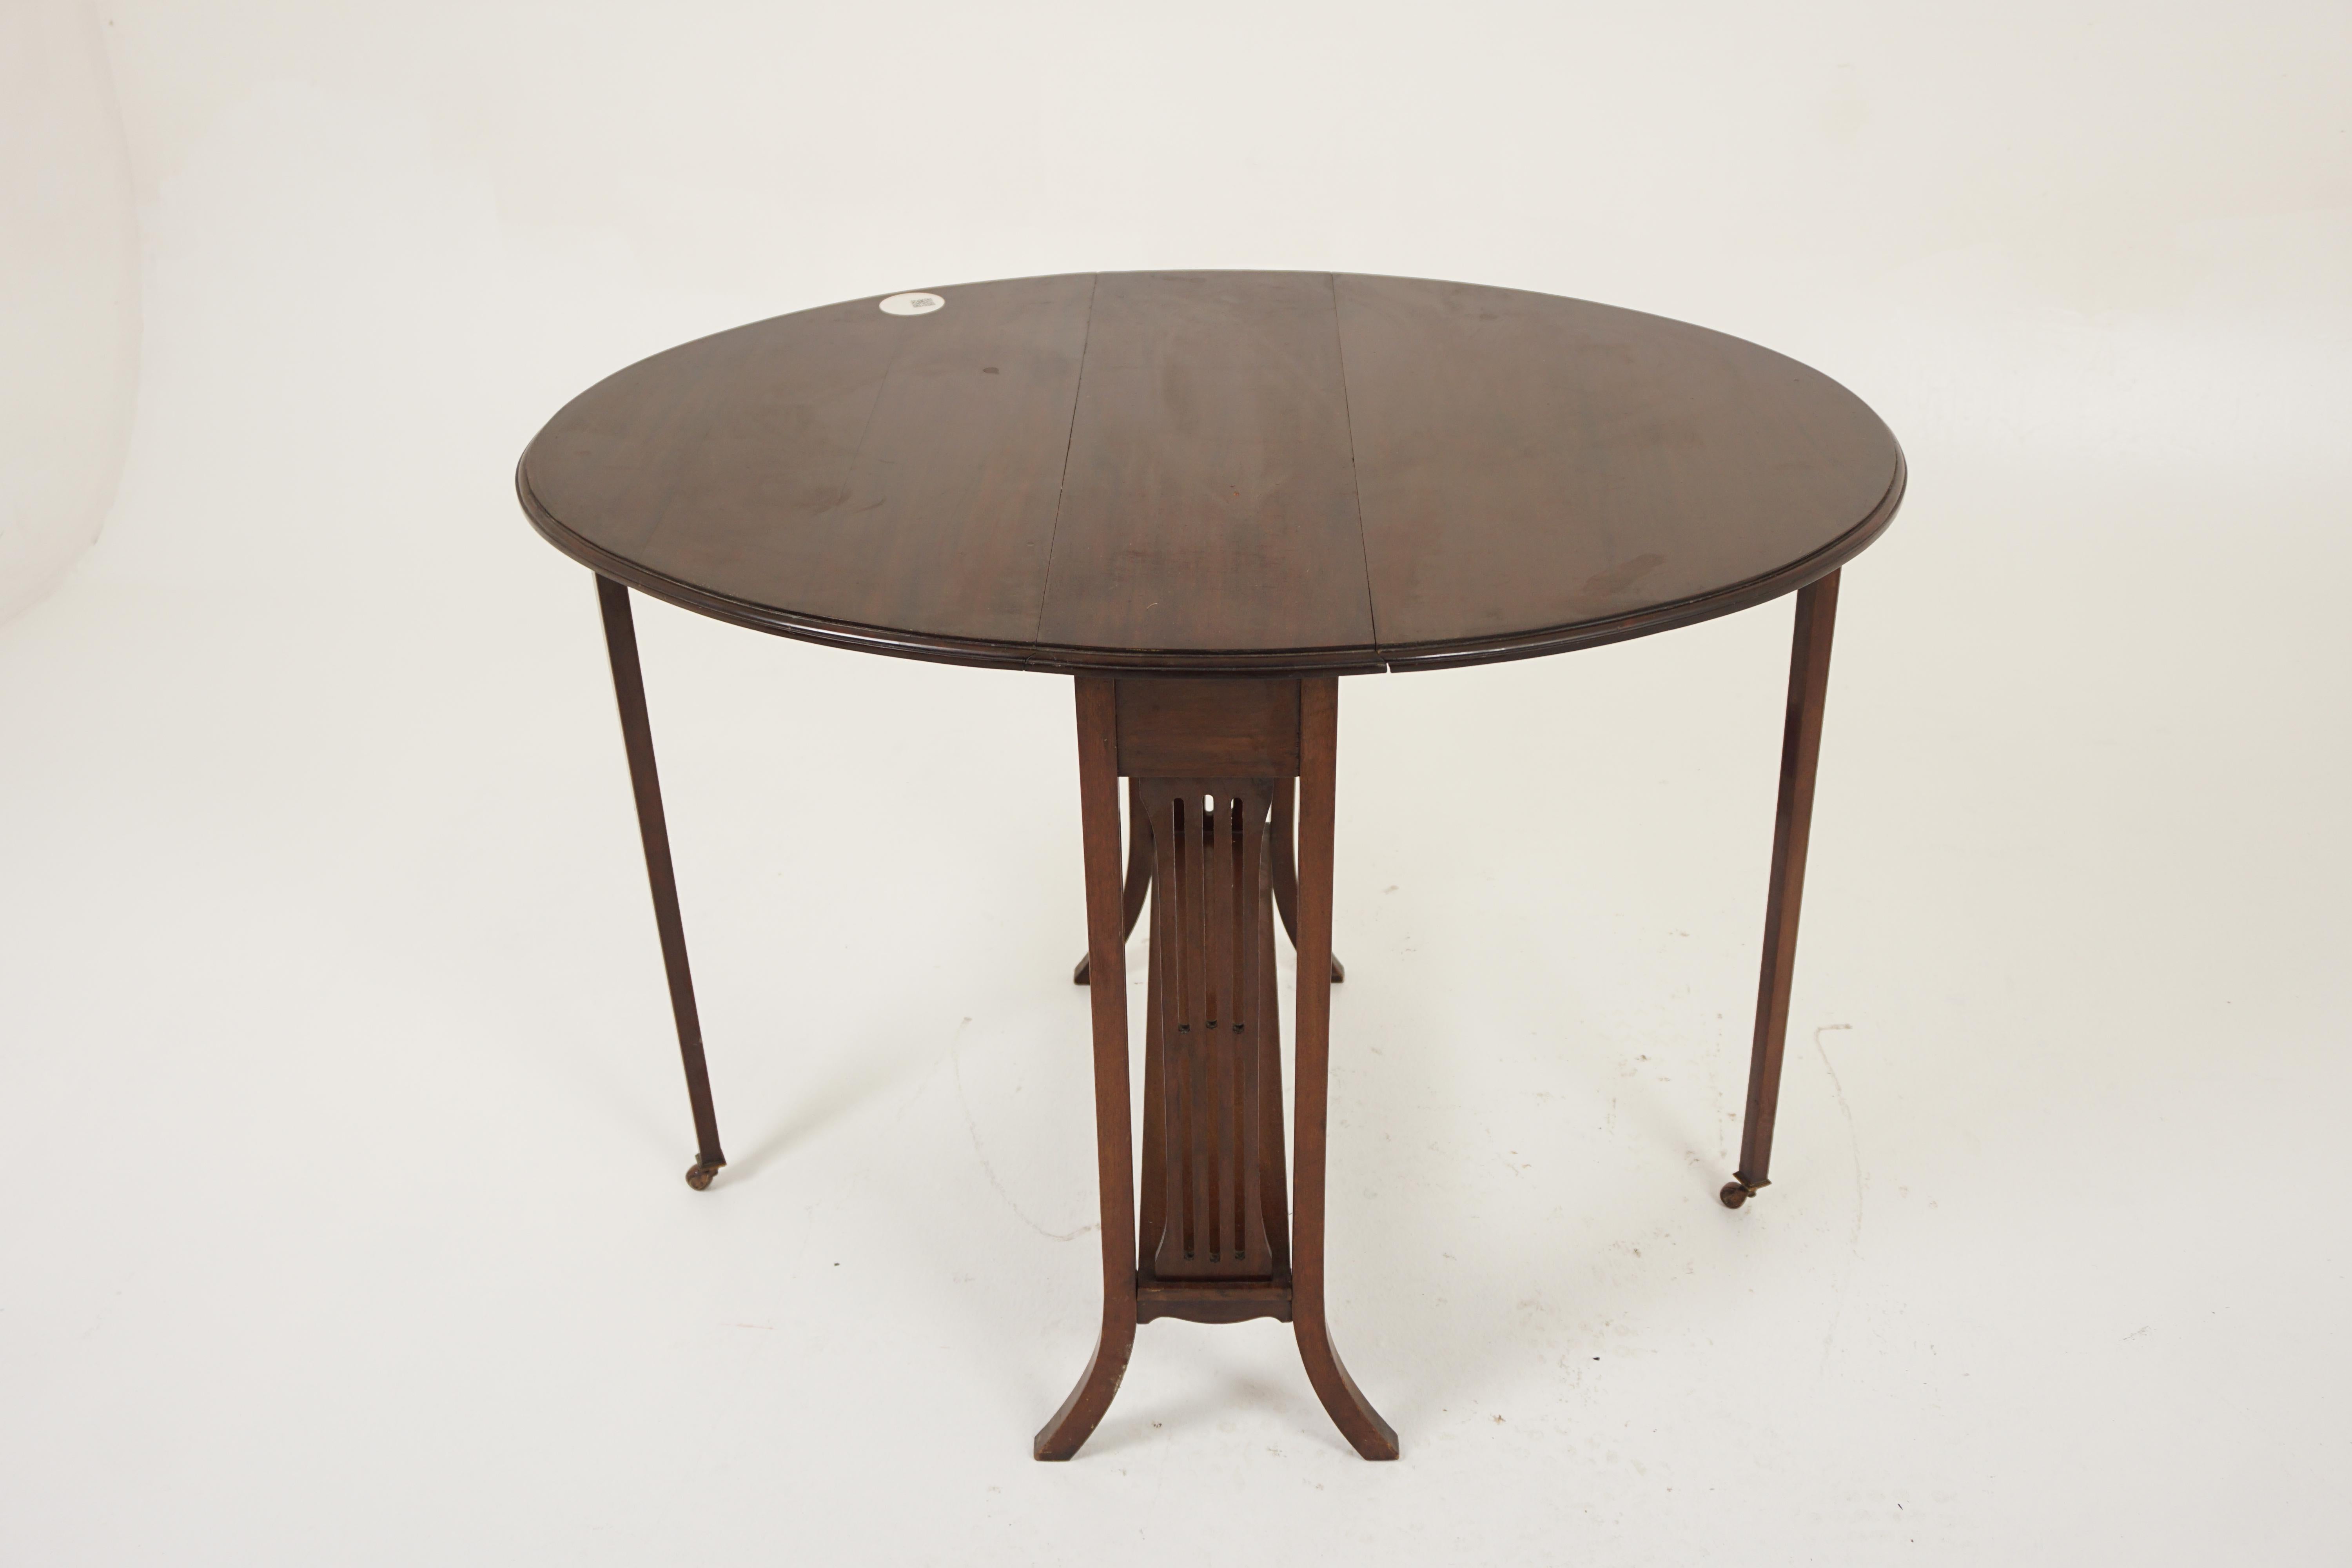 Scottish Antique Walnut Table, Oval Sutherland Drop Leaf Side Table, Scotland 1910, H1138